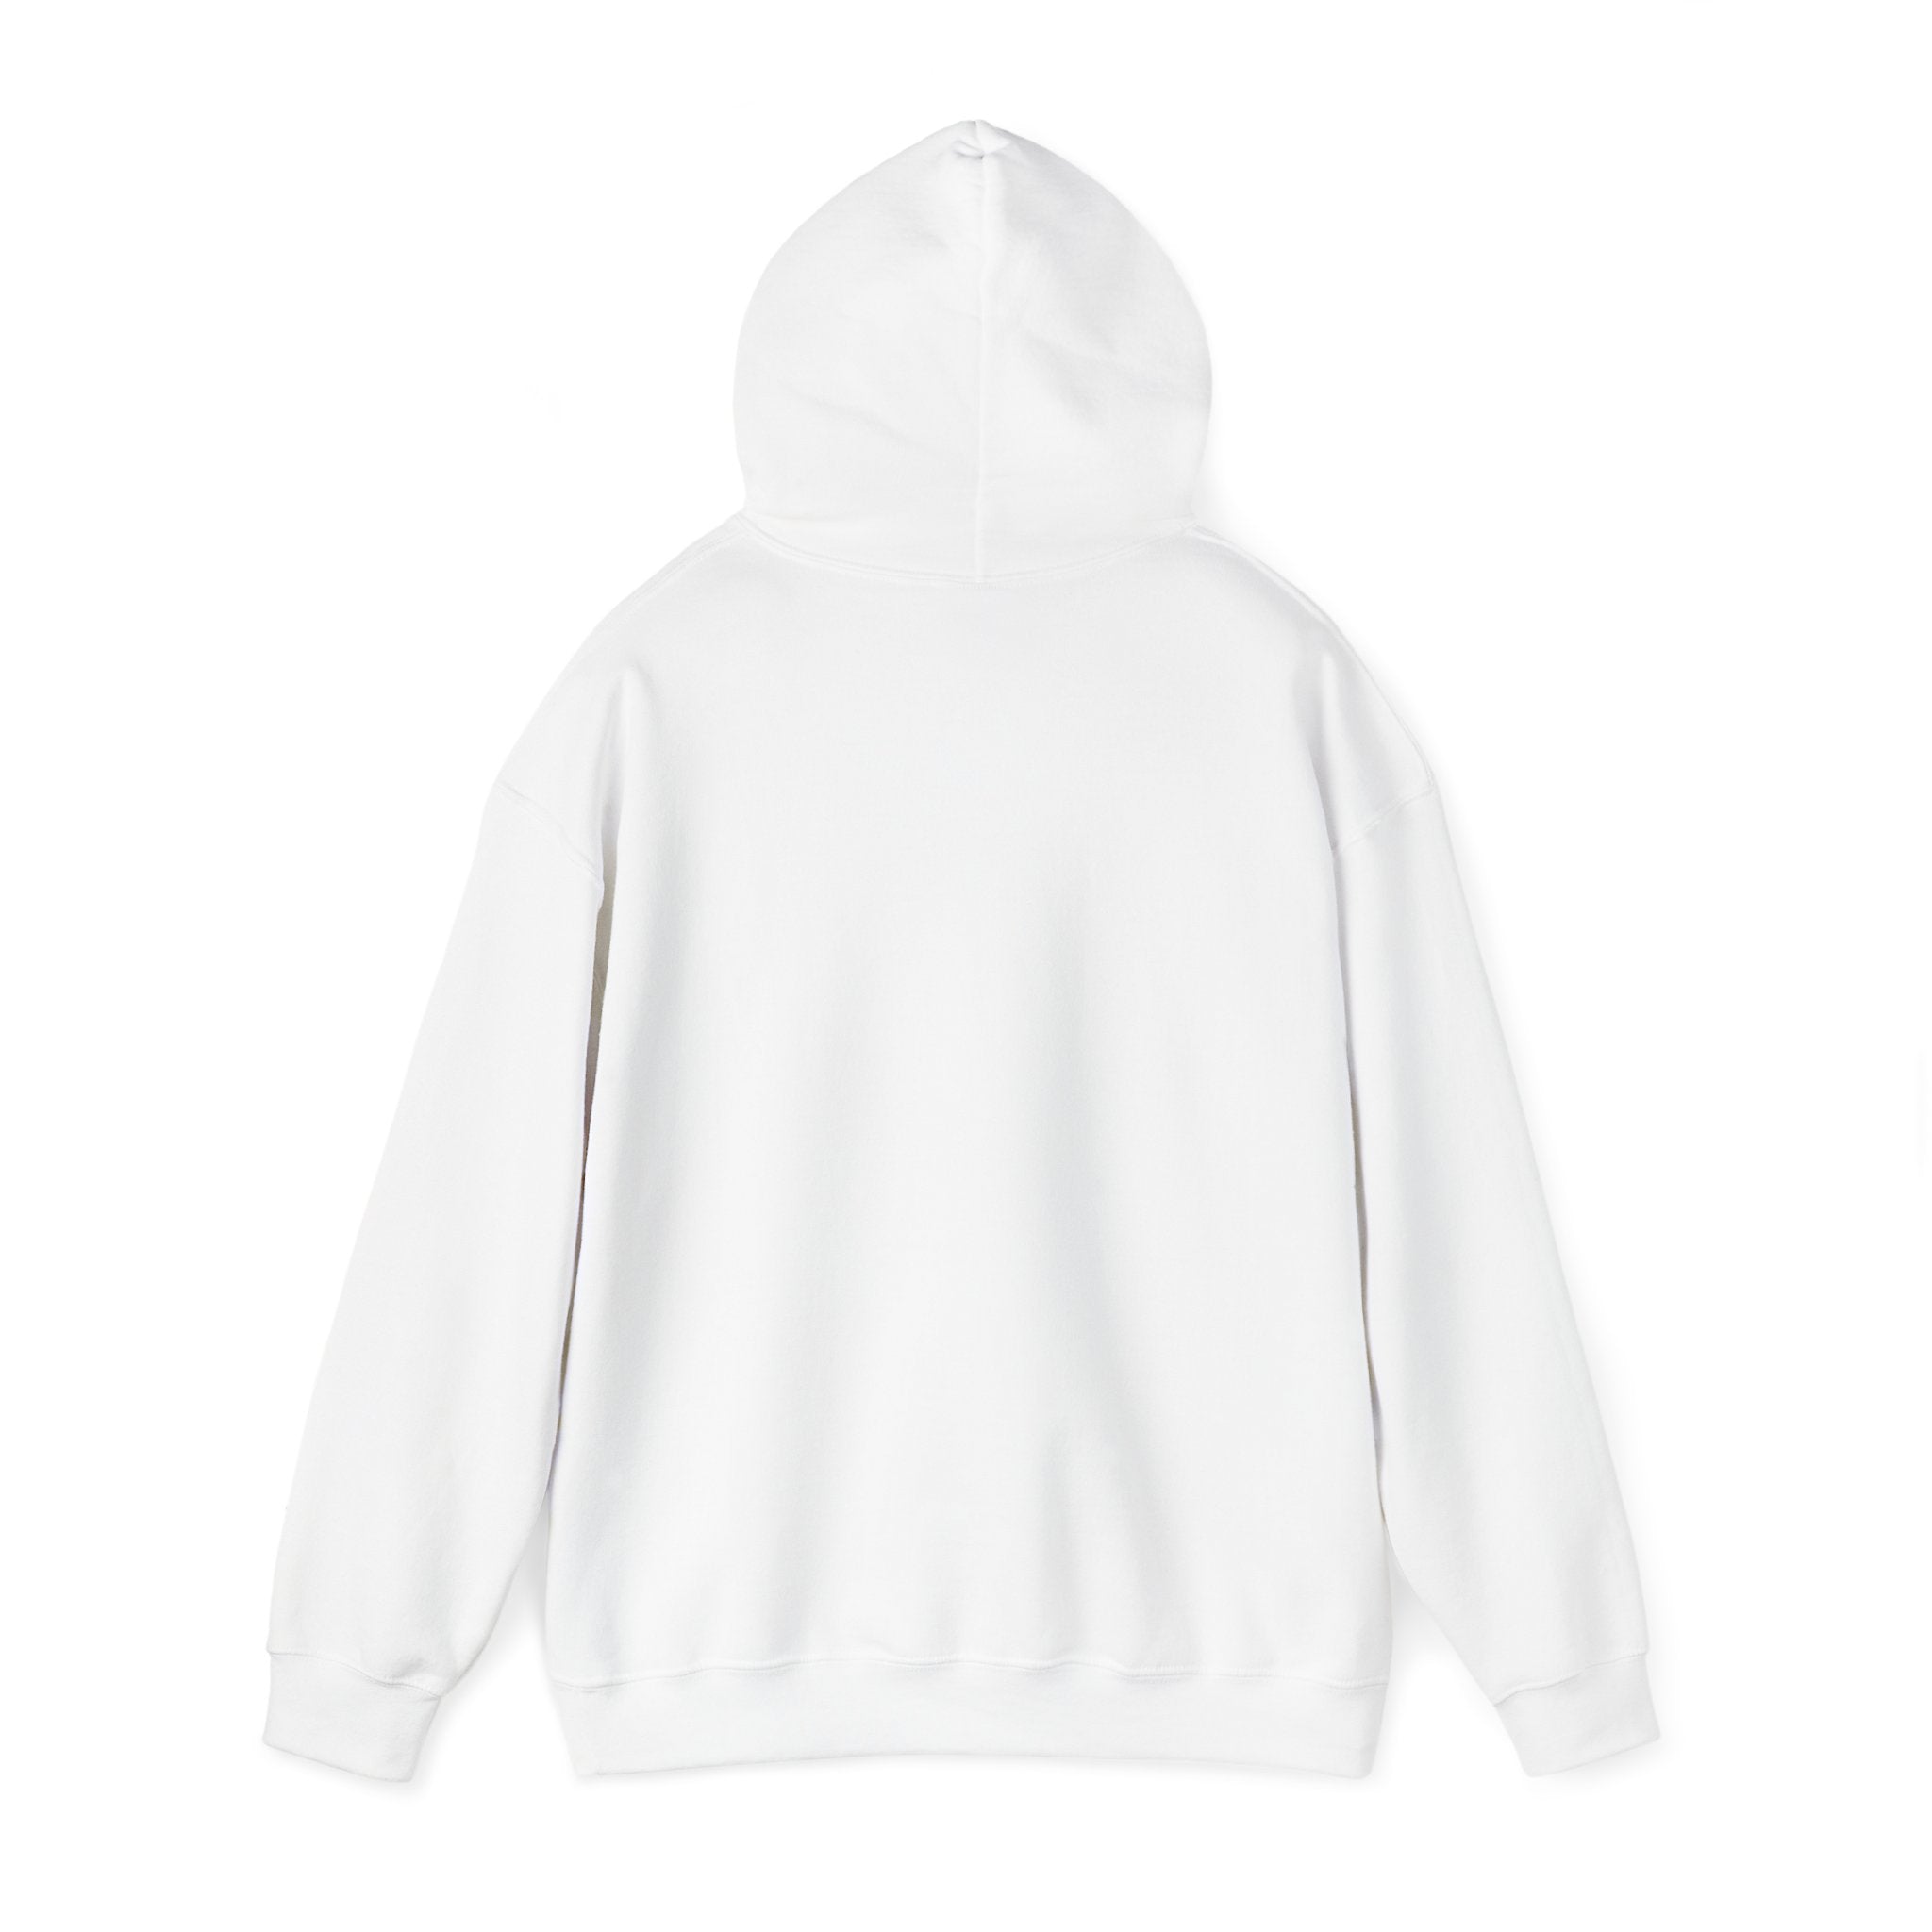 GPAA Hooded Sweatshirt